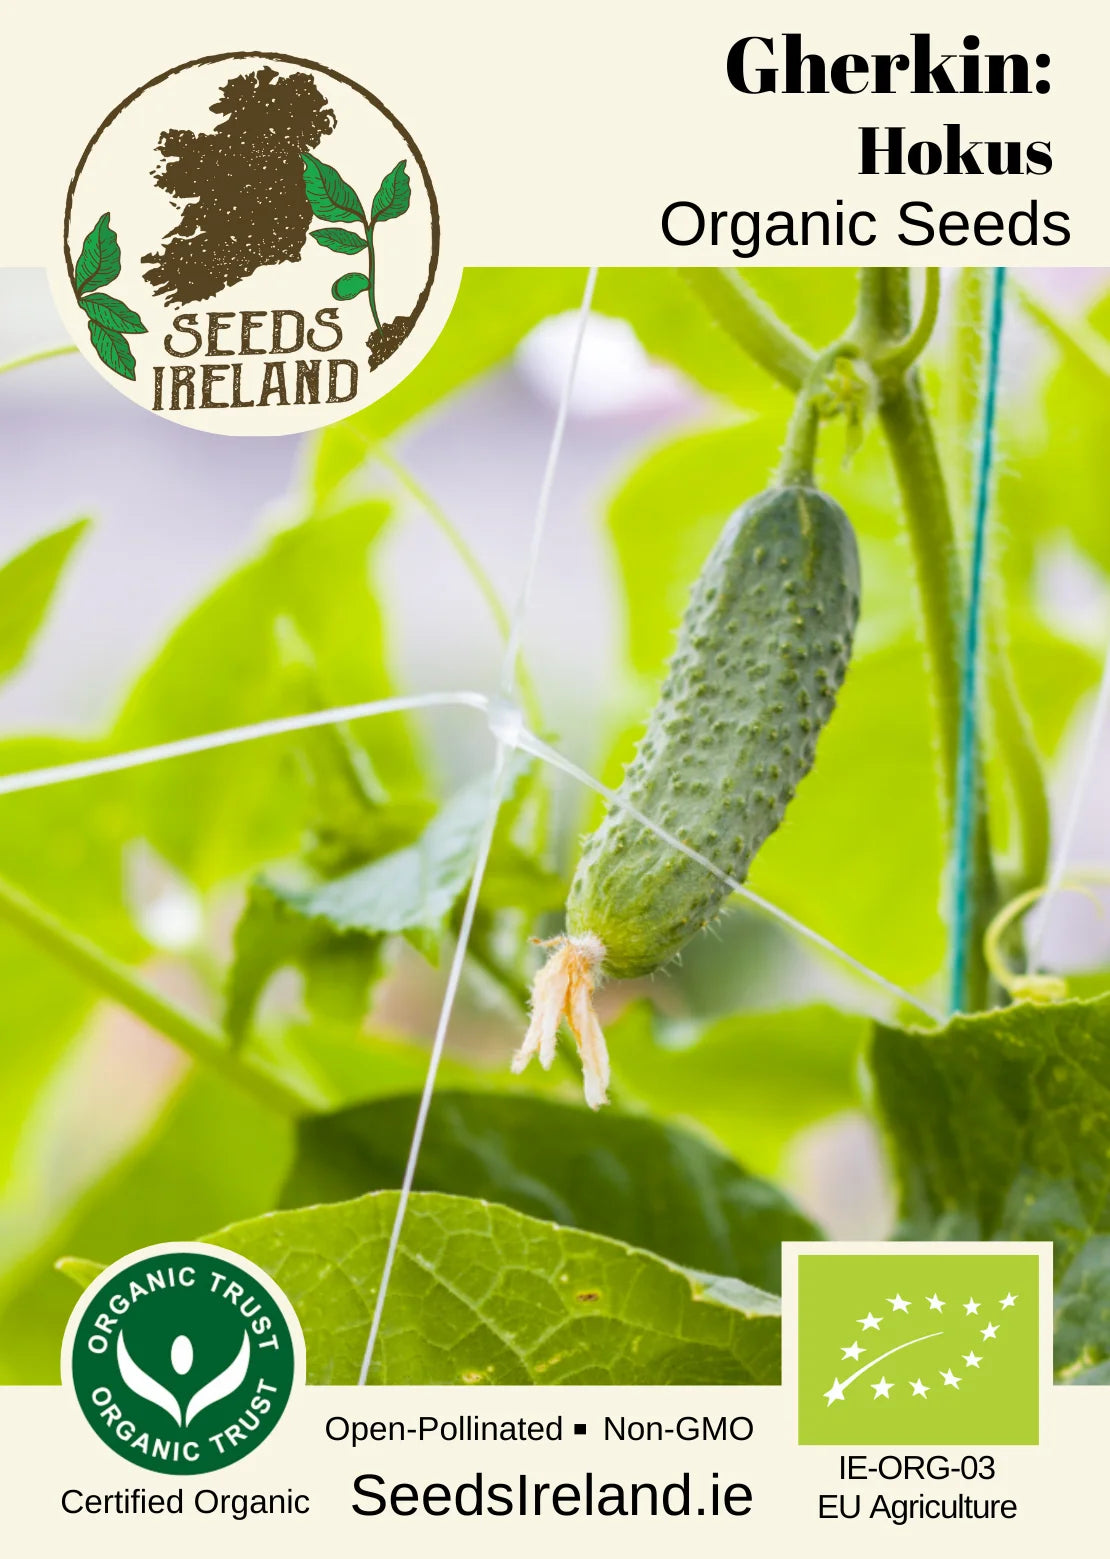 Gherkin: Hokus Organic Seed